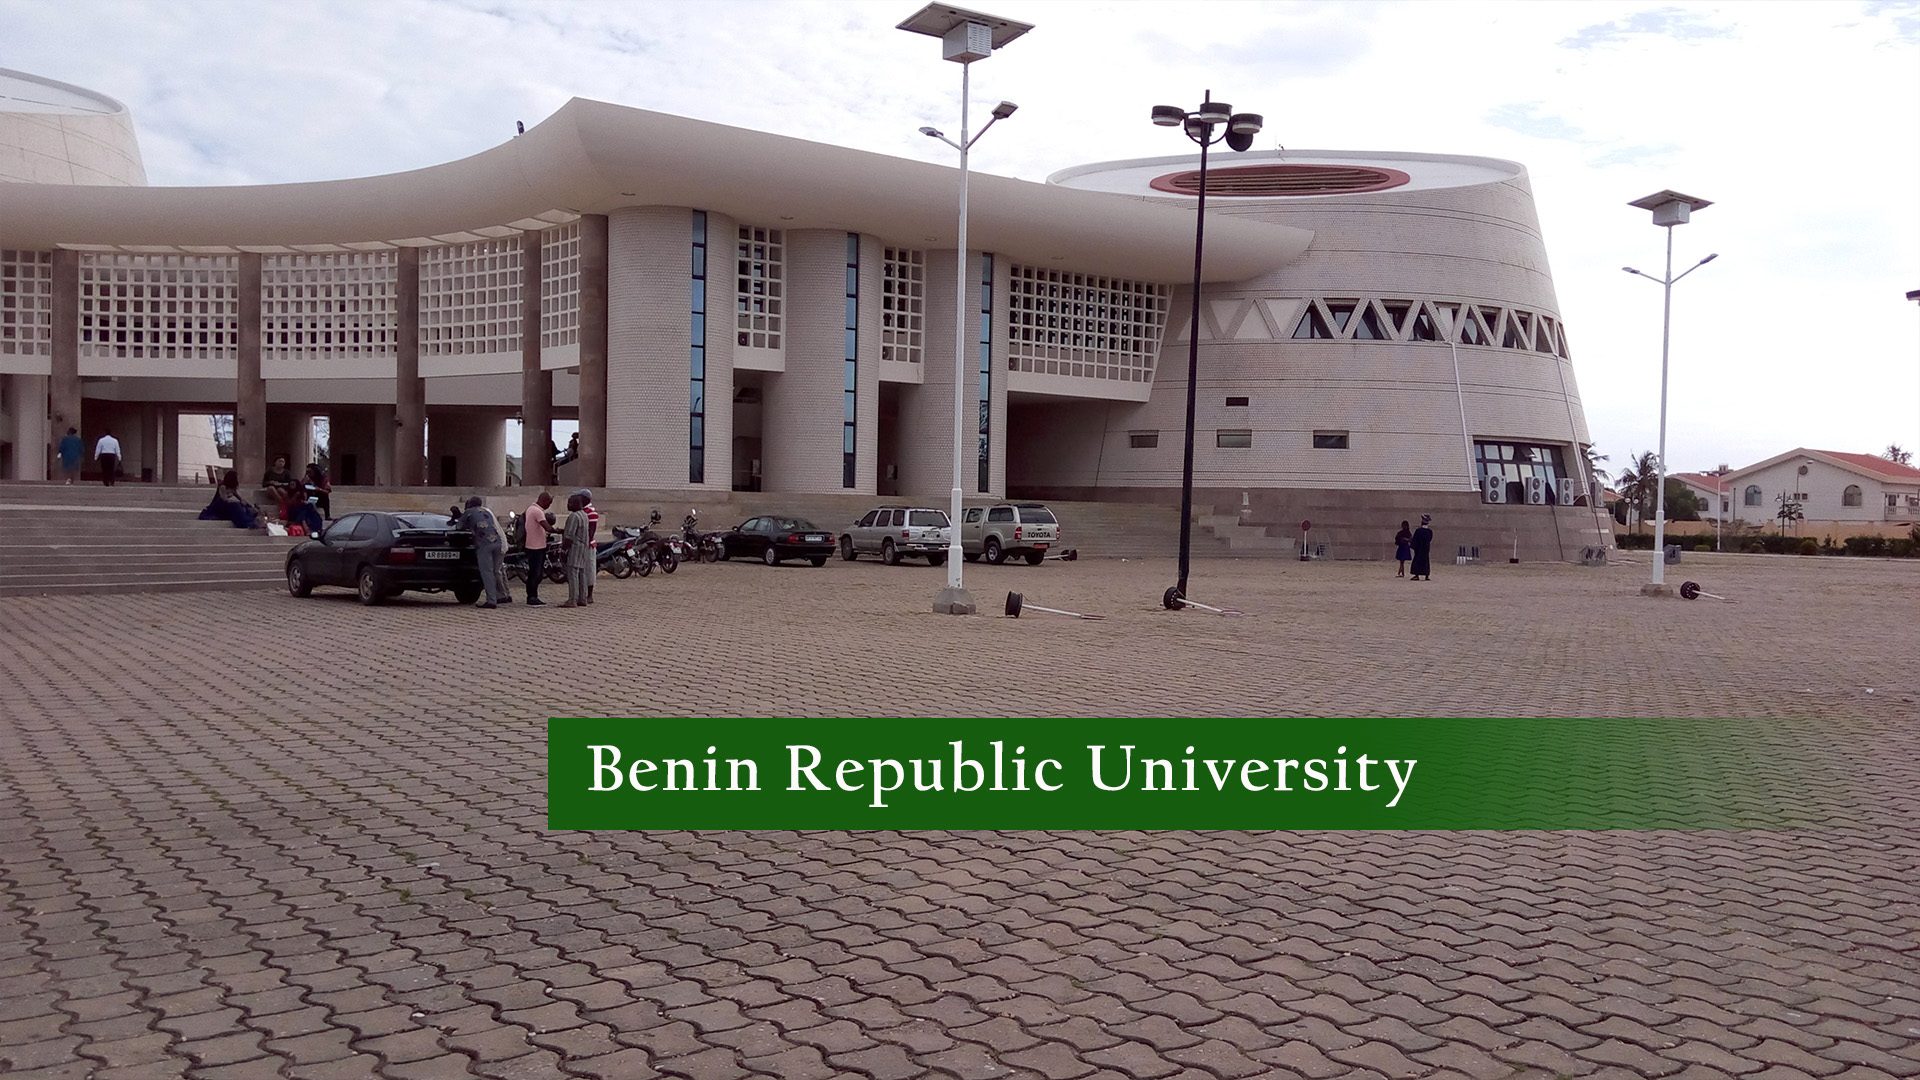 Benin Republic University